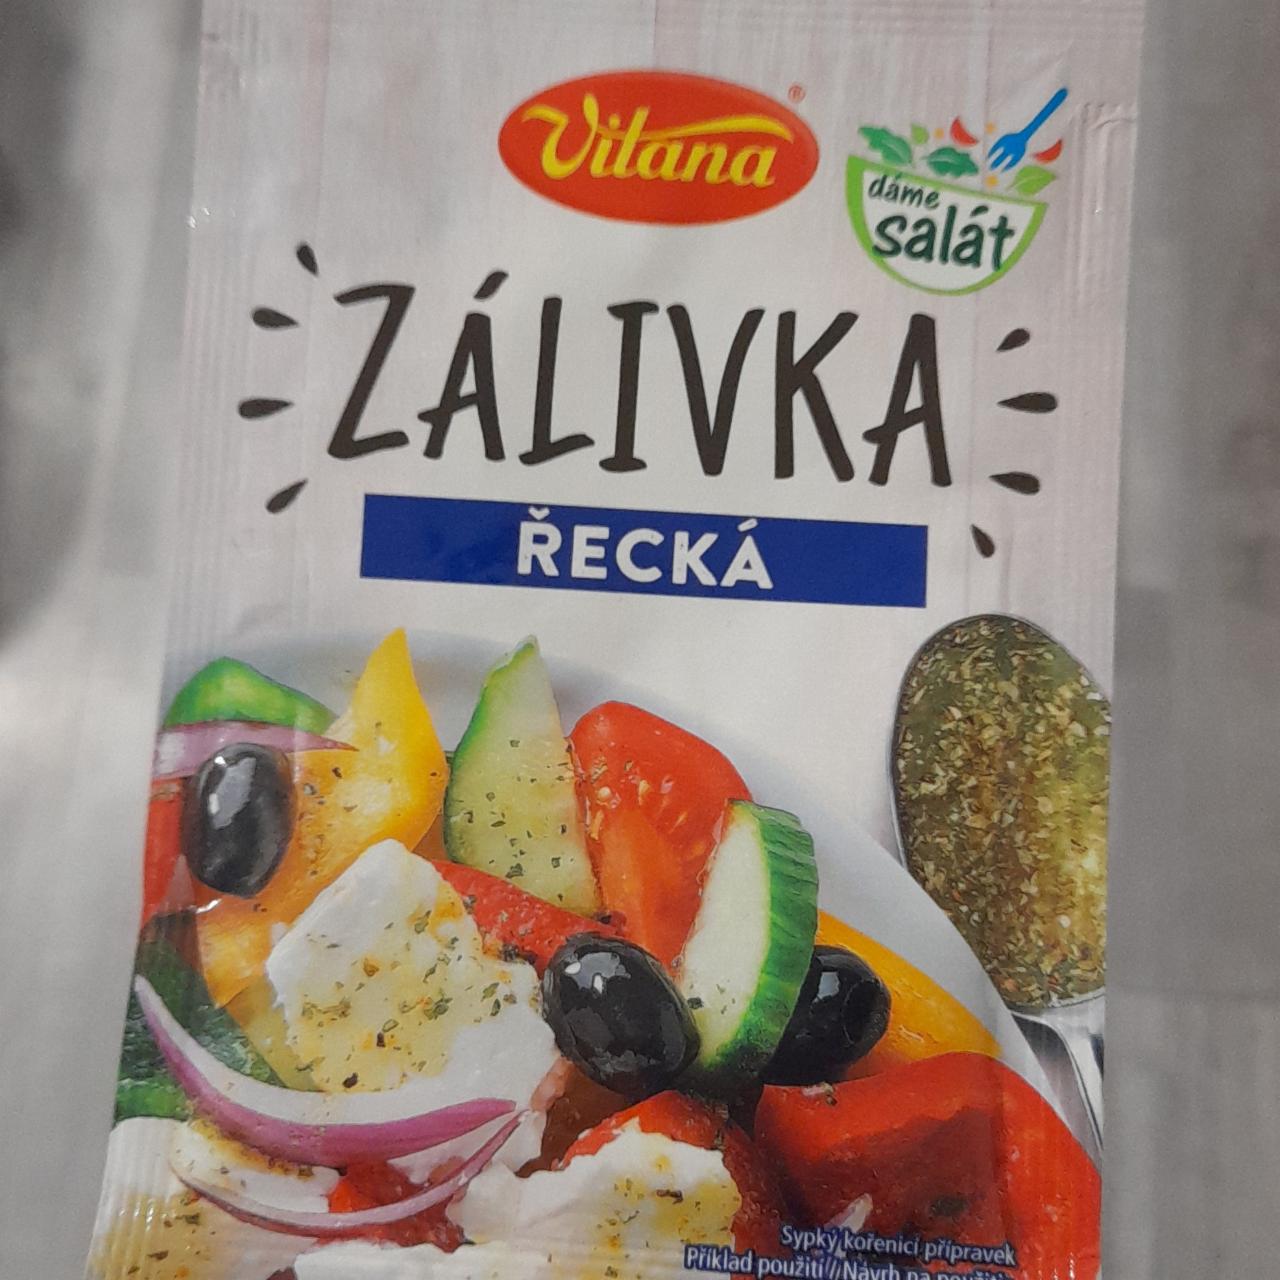 Фото - Заправка к салату Zalivka Recka Vitana